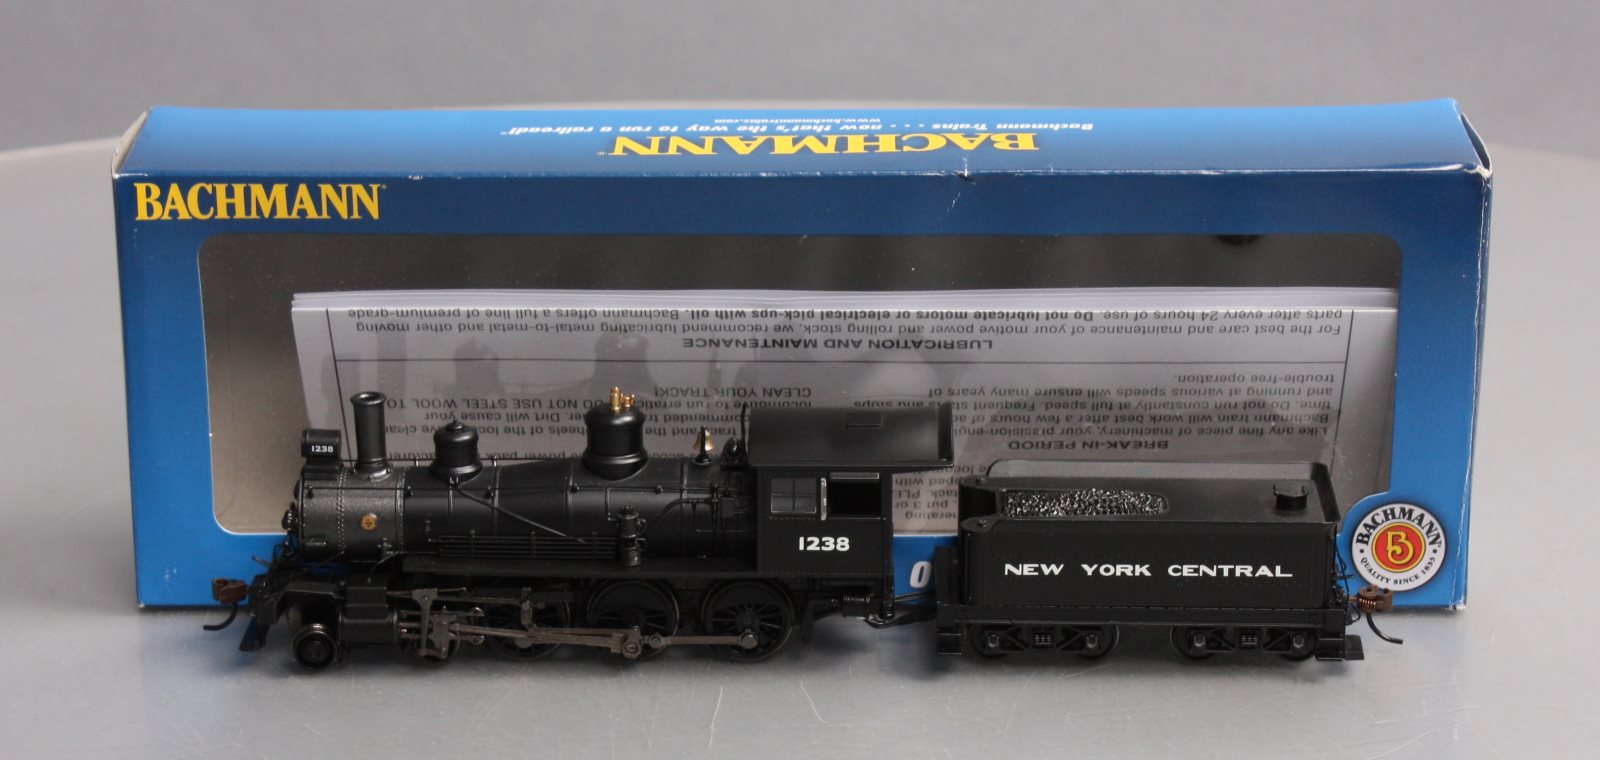 Bachmann 52201 HO New York Central Baldwin 4-6-0 Steam Locomotive #1238